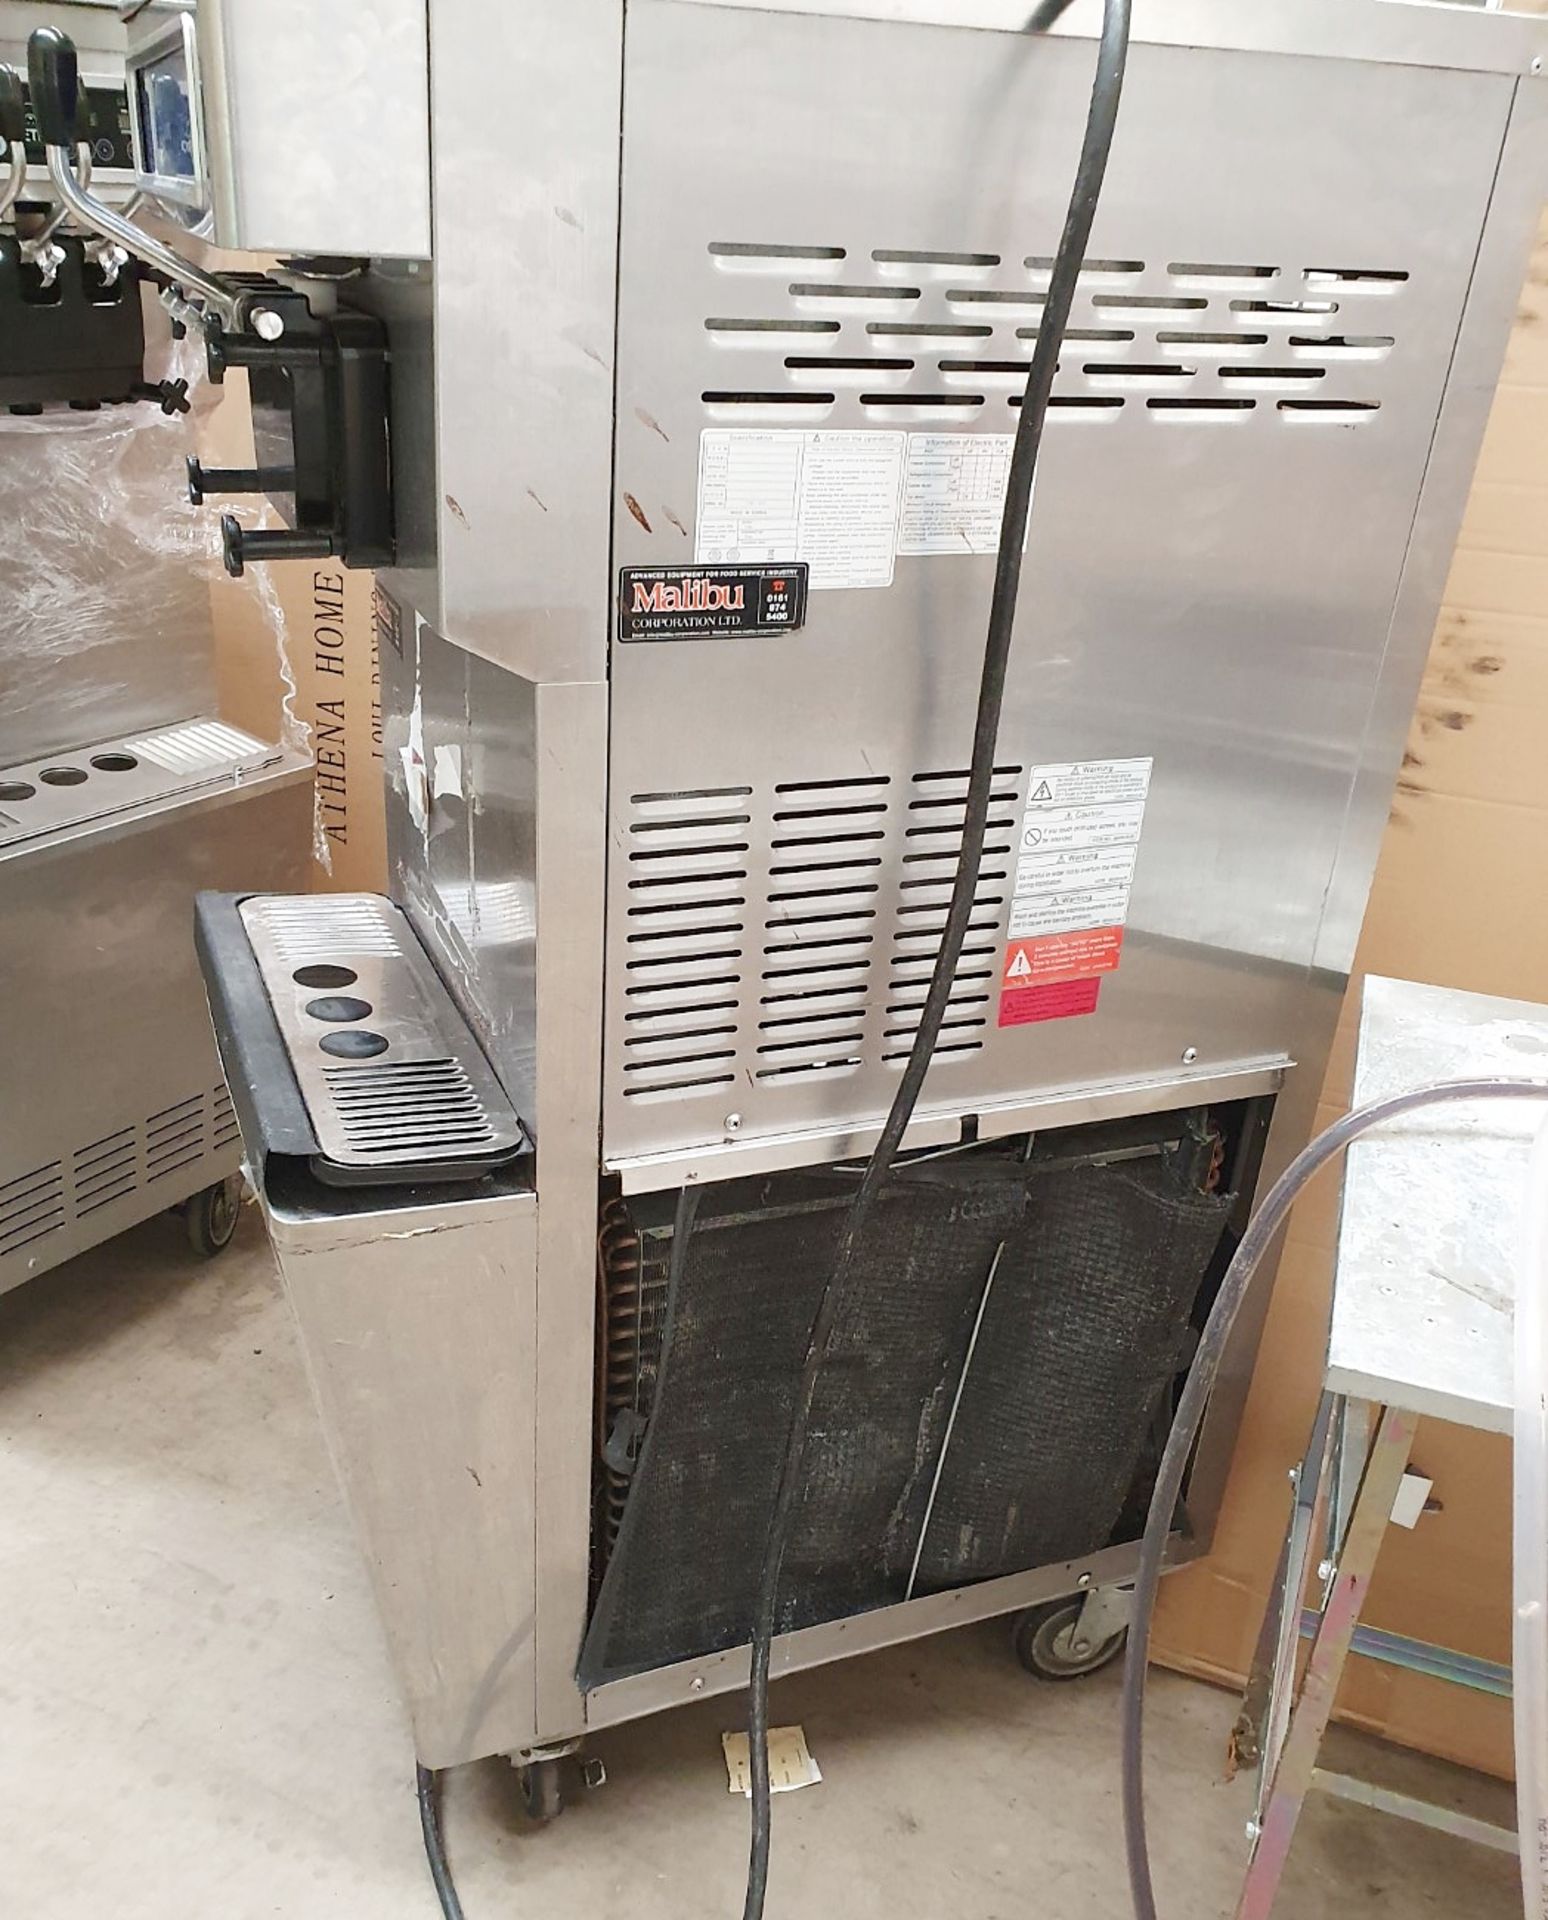 1 x ICETRO Ice Cream Machine - Ref: LD427 - CL350 - Location: Altrincham WA14 - Image 7 of 7